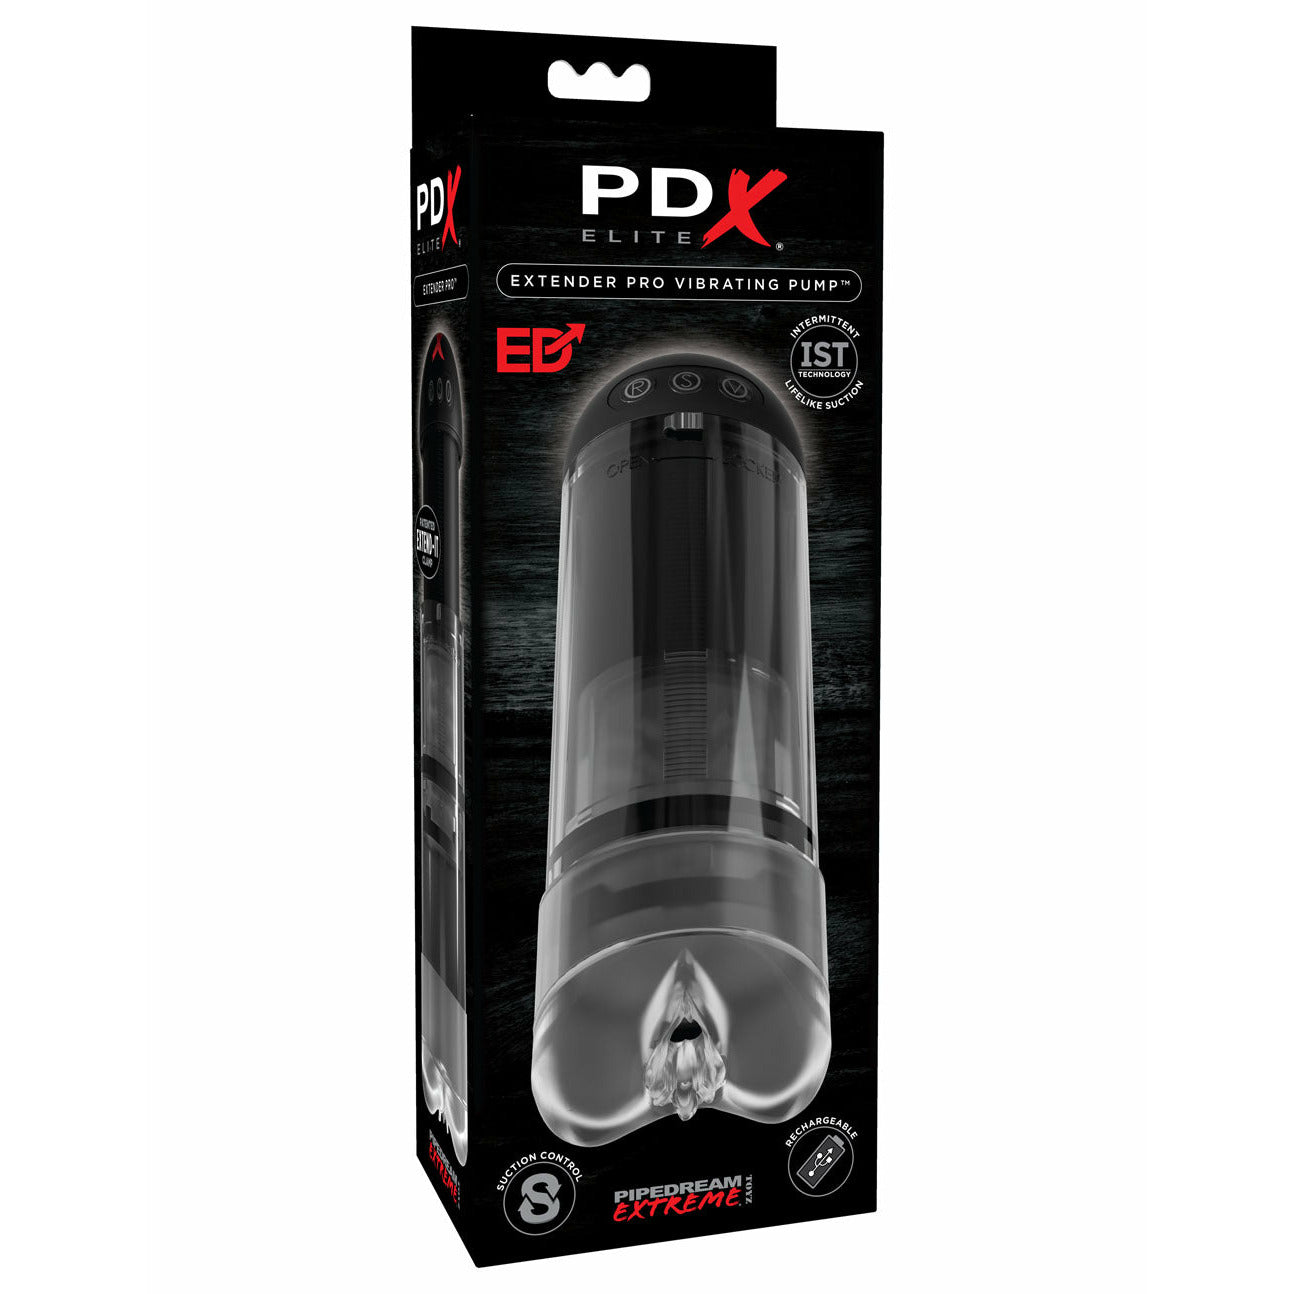 PDX Elite Extender Pro Vibrating Pump Stroker